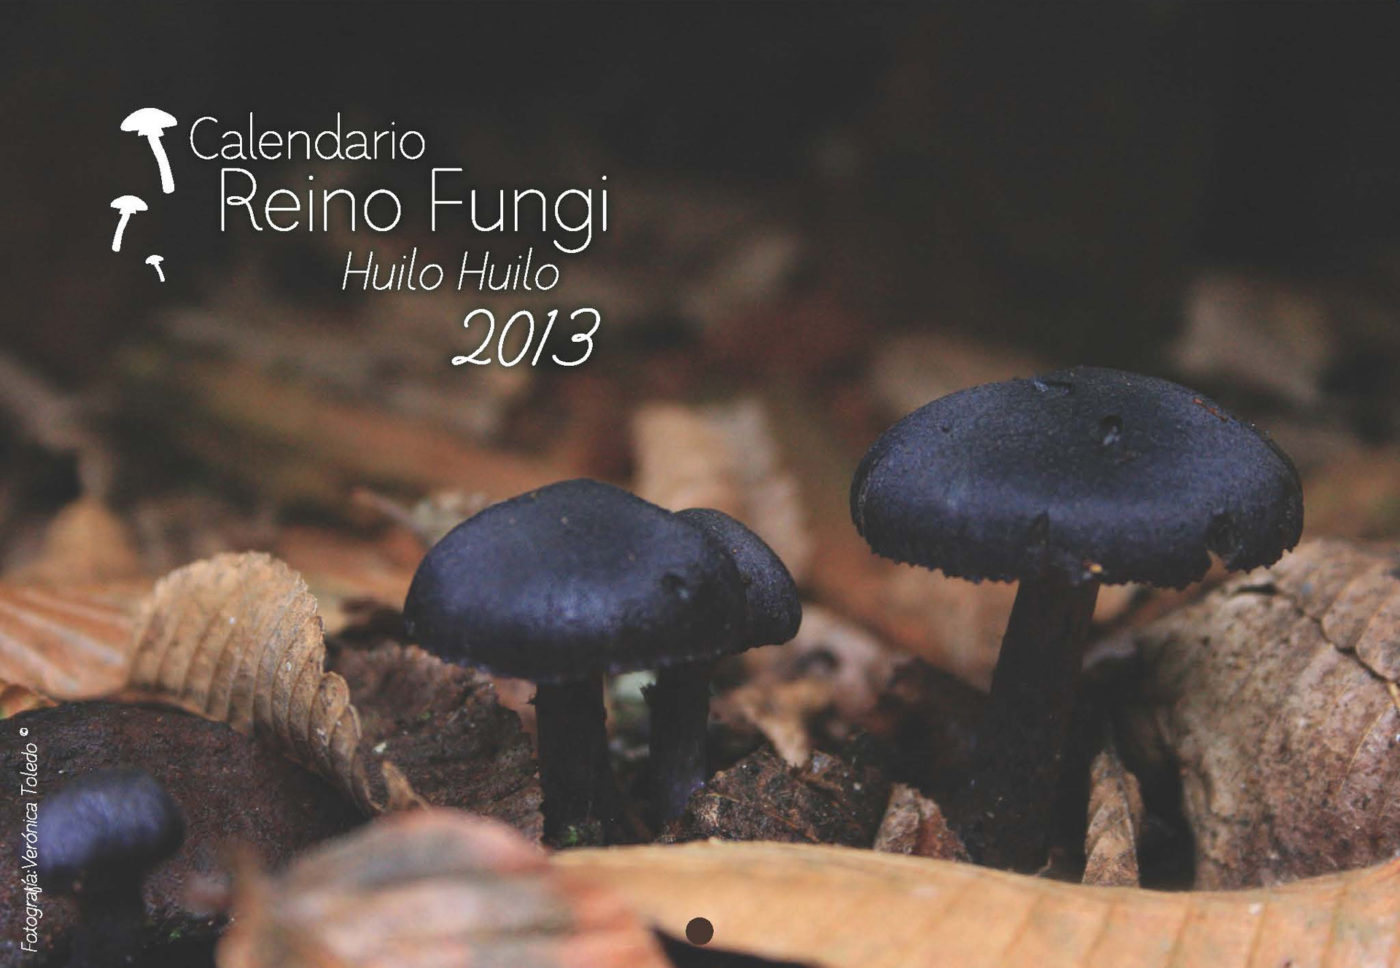 Calendario del reino Fungi  en  la Reserva HuiloHuilo